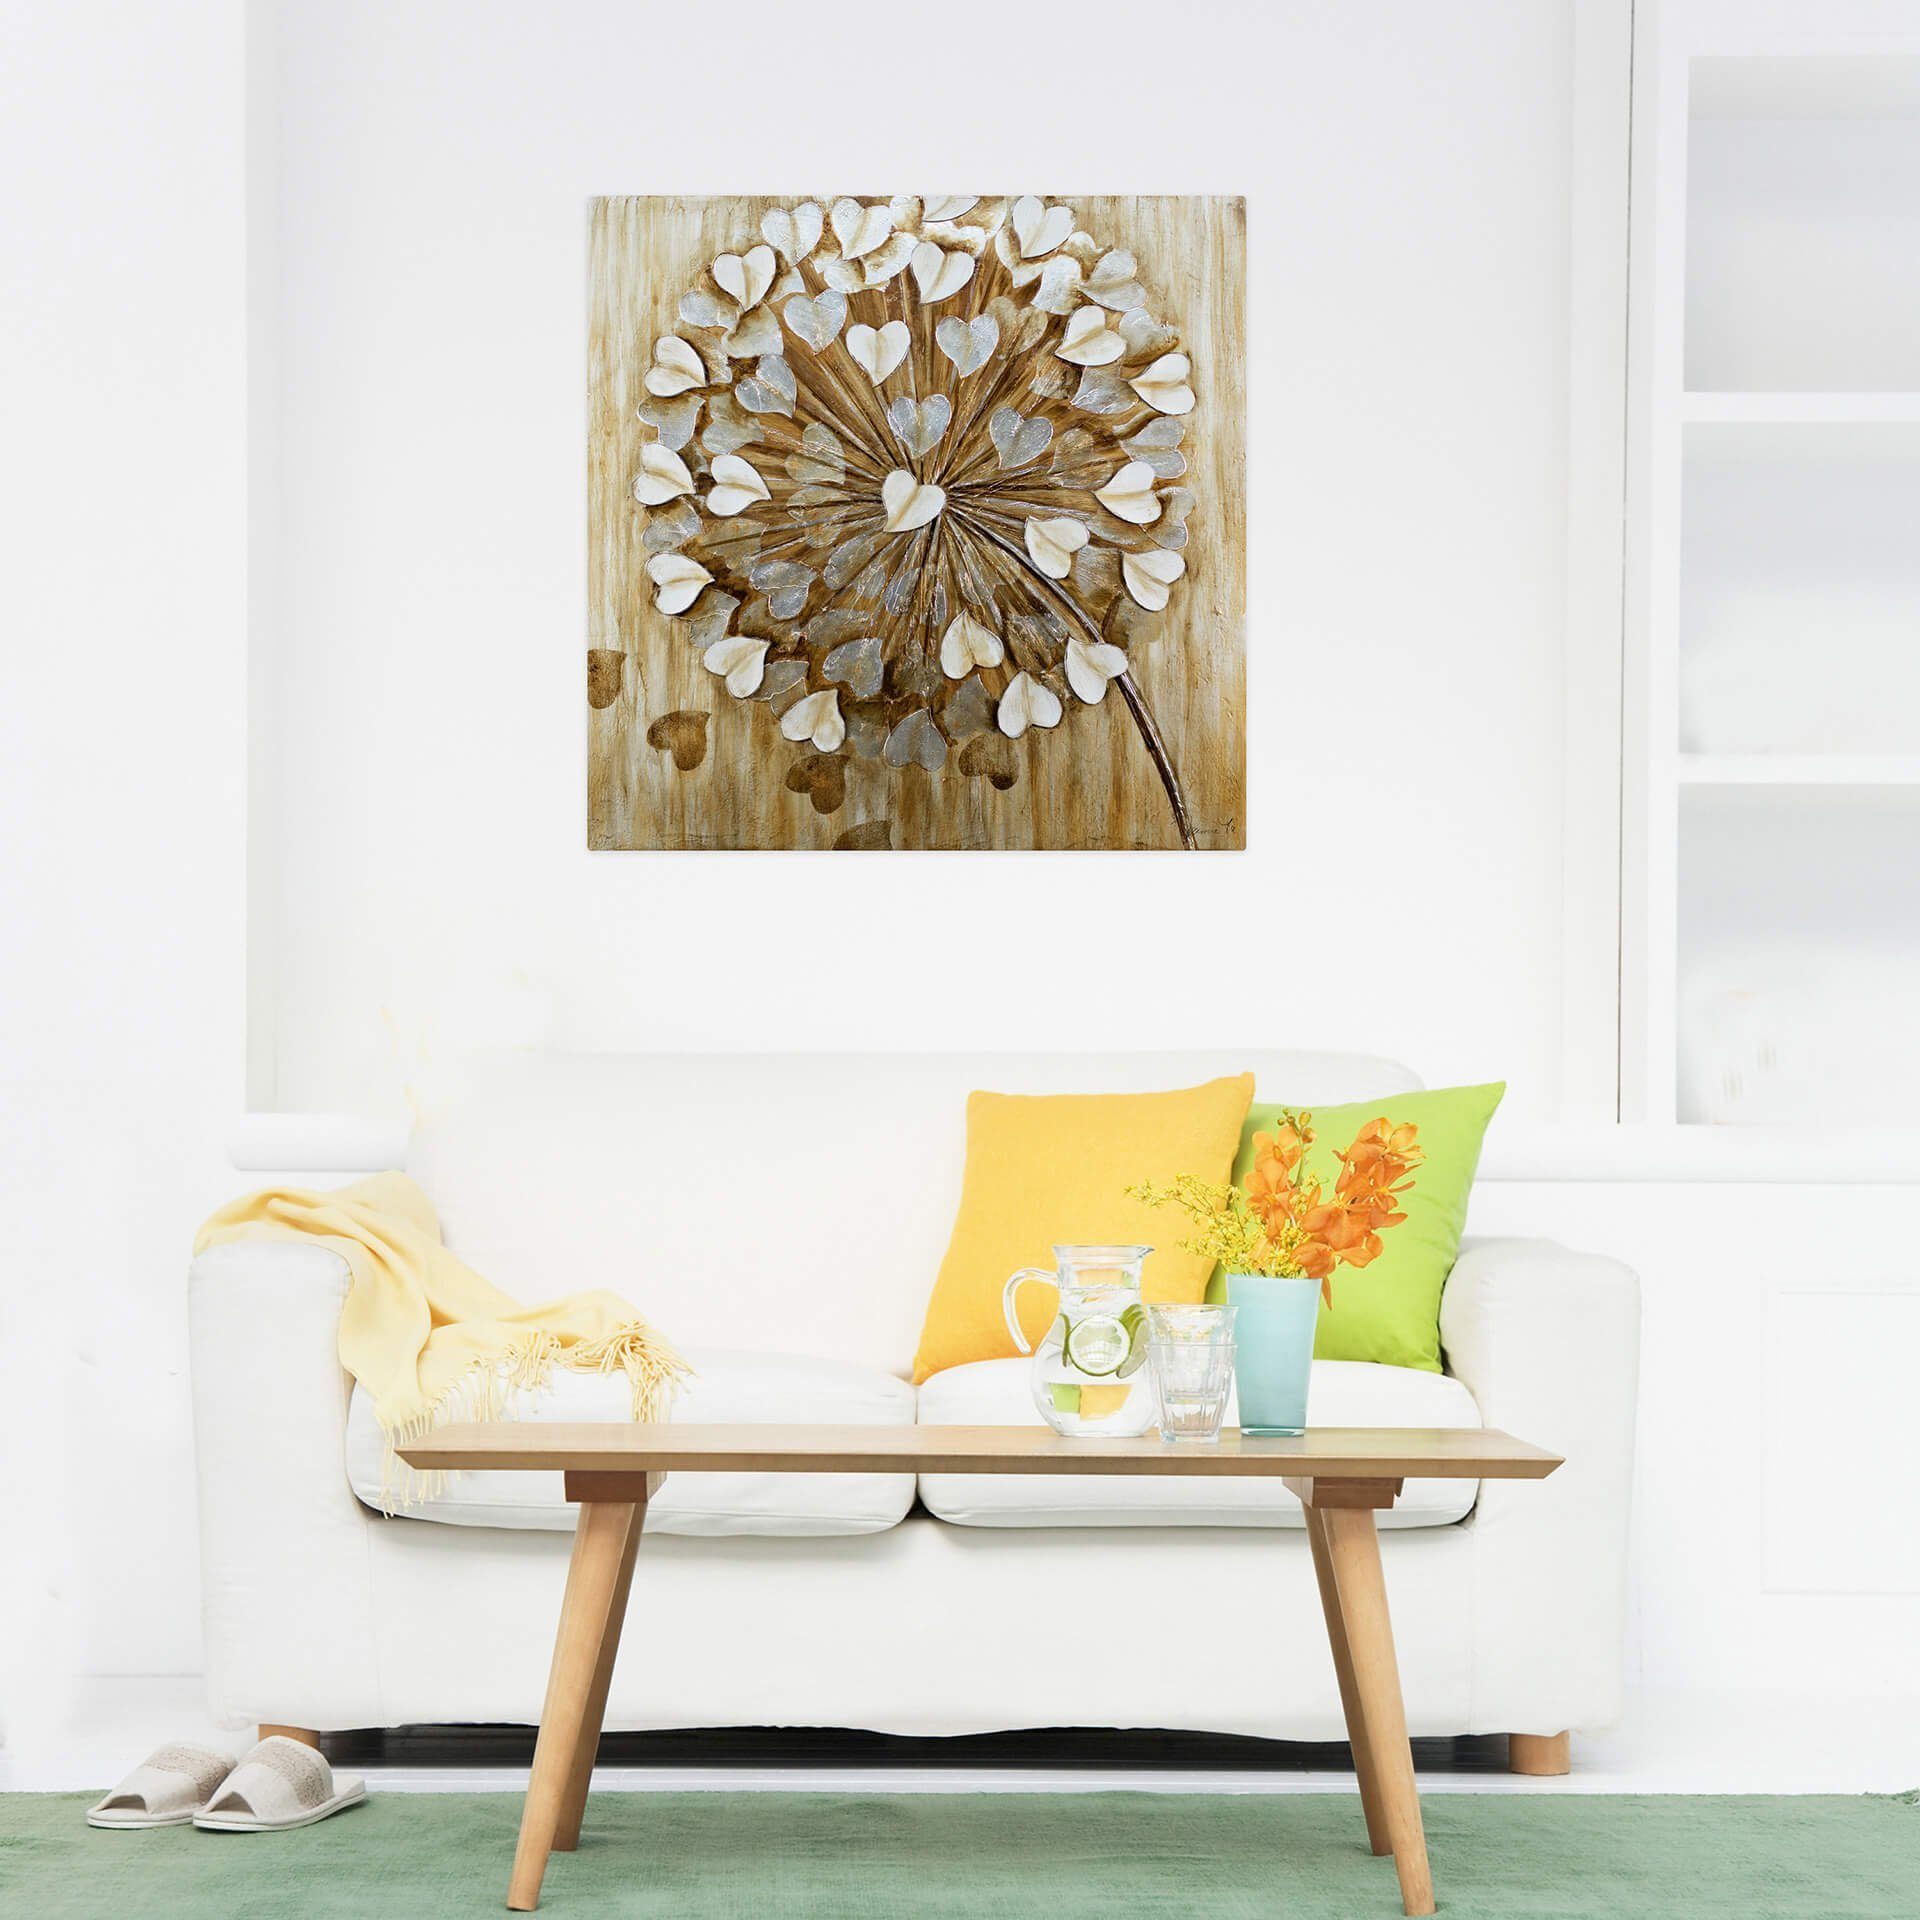 Gemälde KUNSTLOFT 100% Wohnzimmer Pusteblume im Wandbild HANDGEMALT Wind cm, 80x80 Leinwandbild